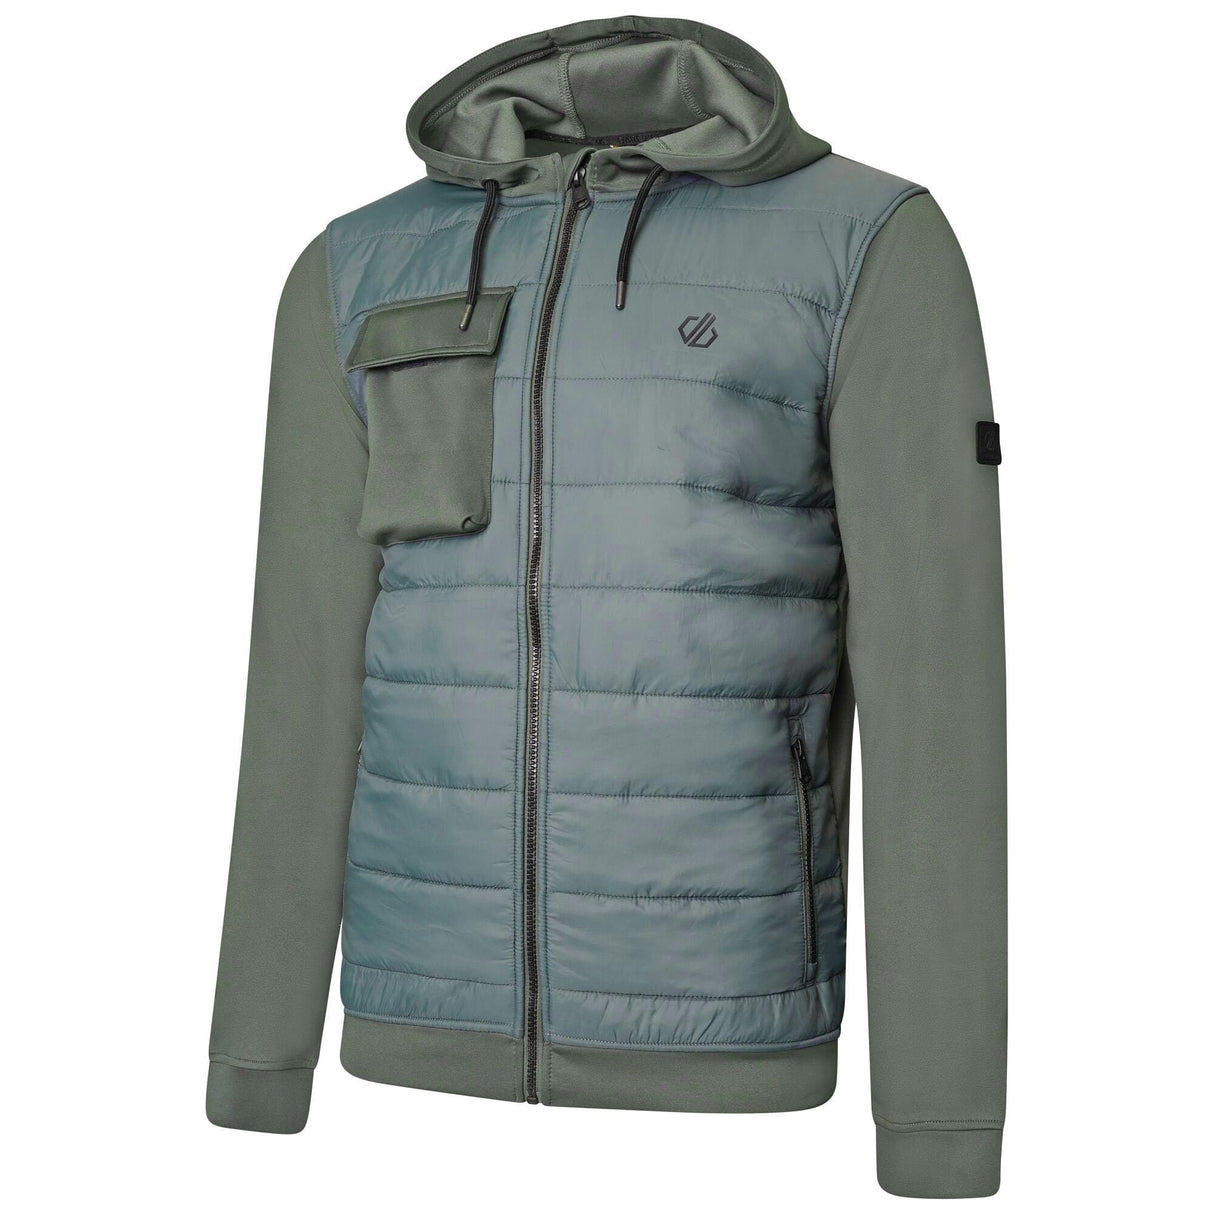 Dare 2b Men's Look Sharp Hybrid Insulated Jacket